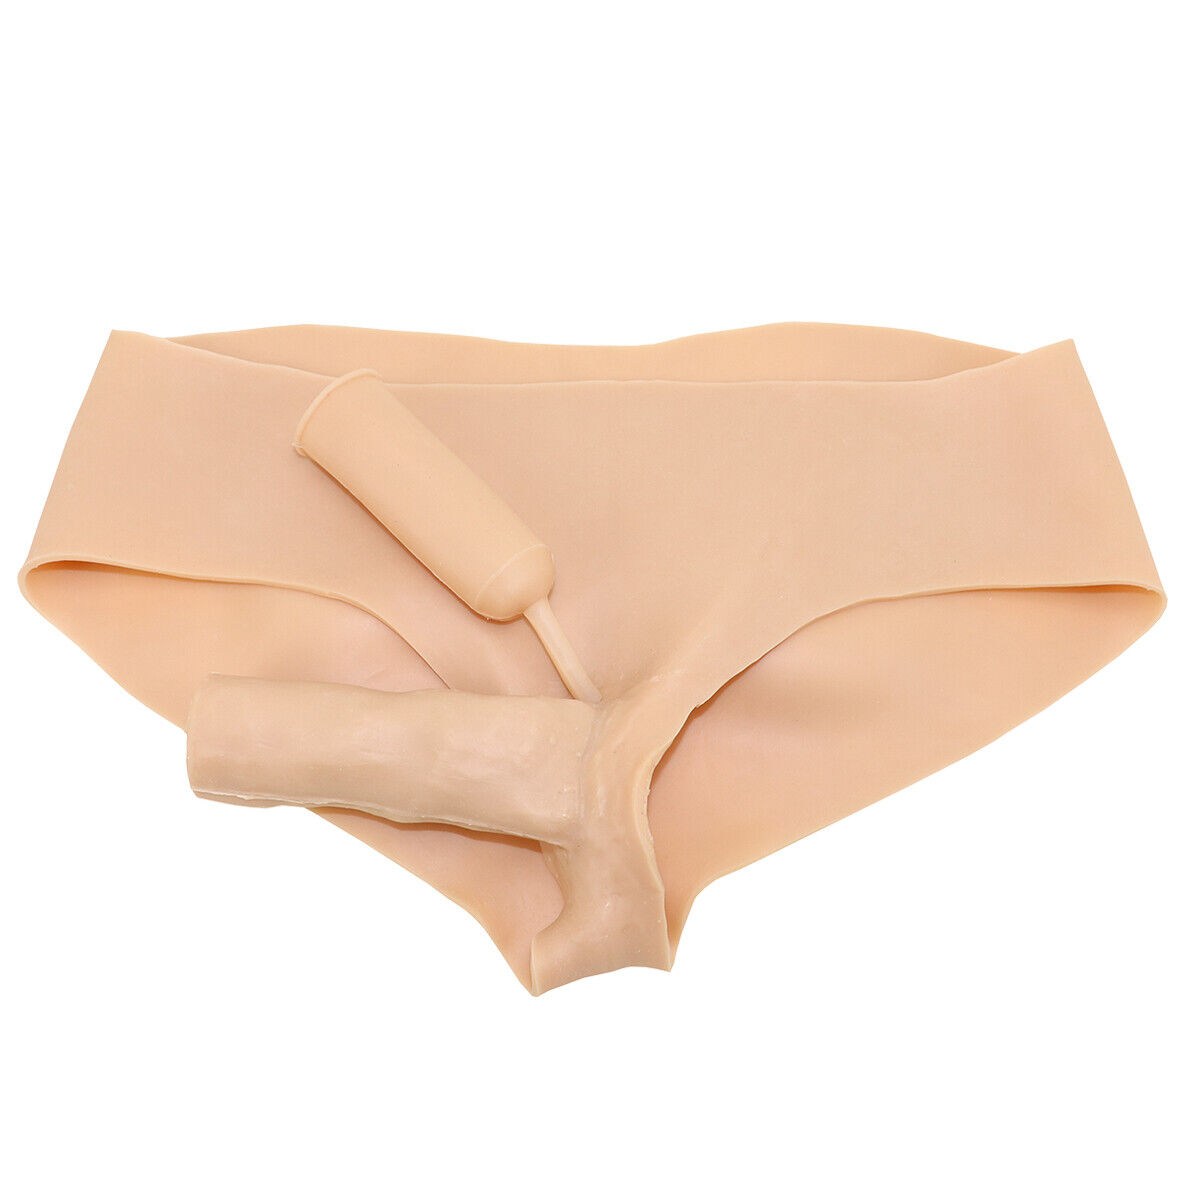 Sexy Silicone Full Body Padded Buttock Enhancer Shaper Insert Panty  Crossdress